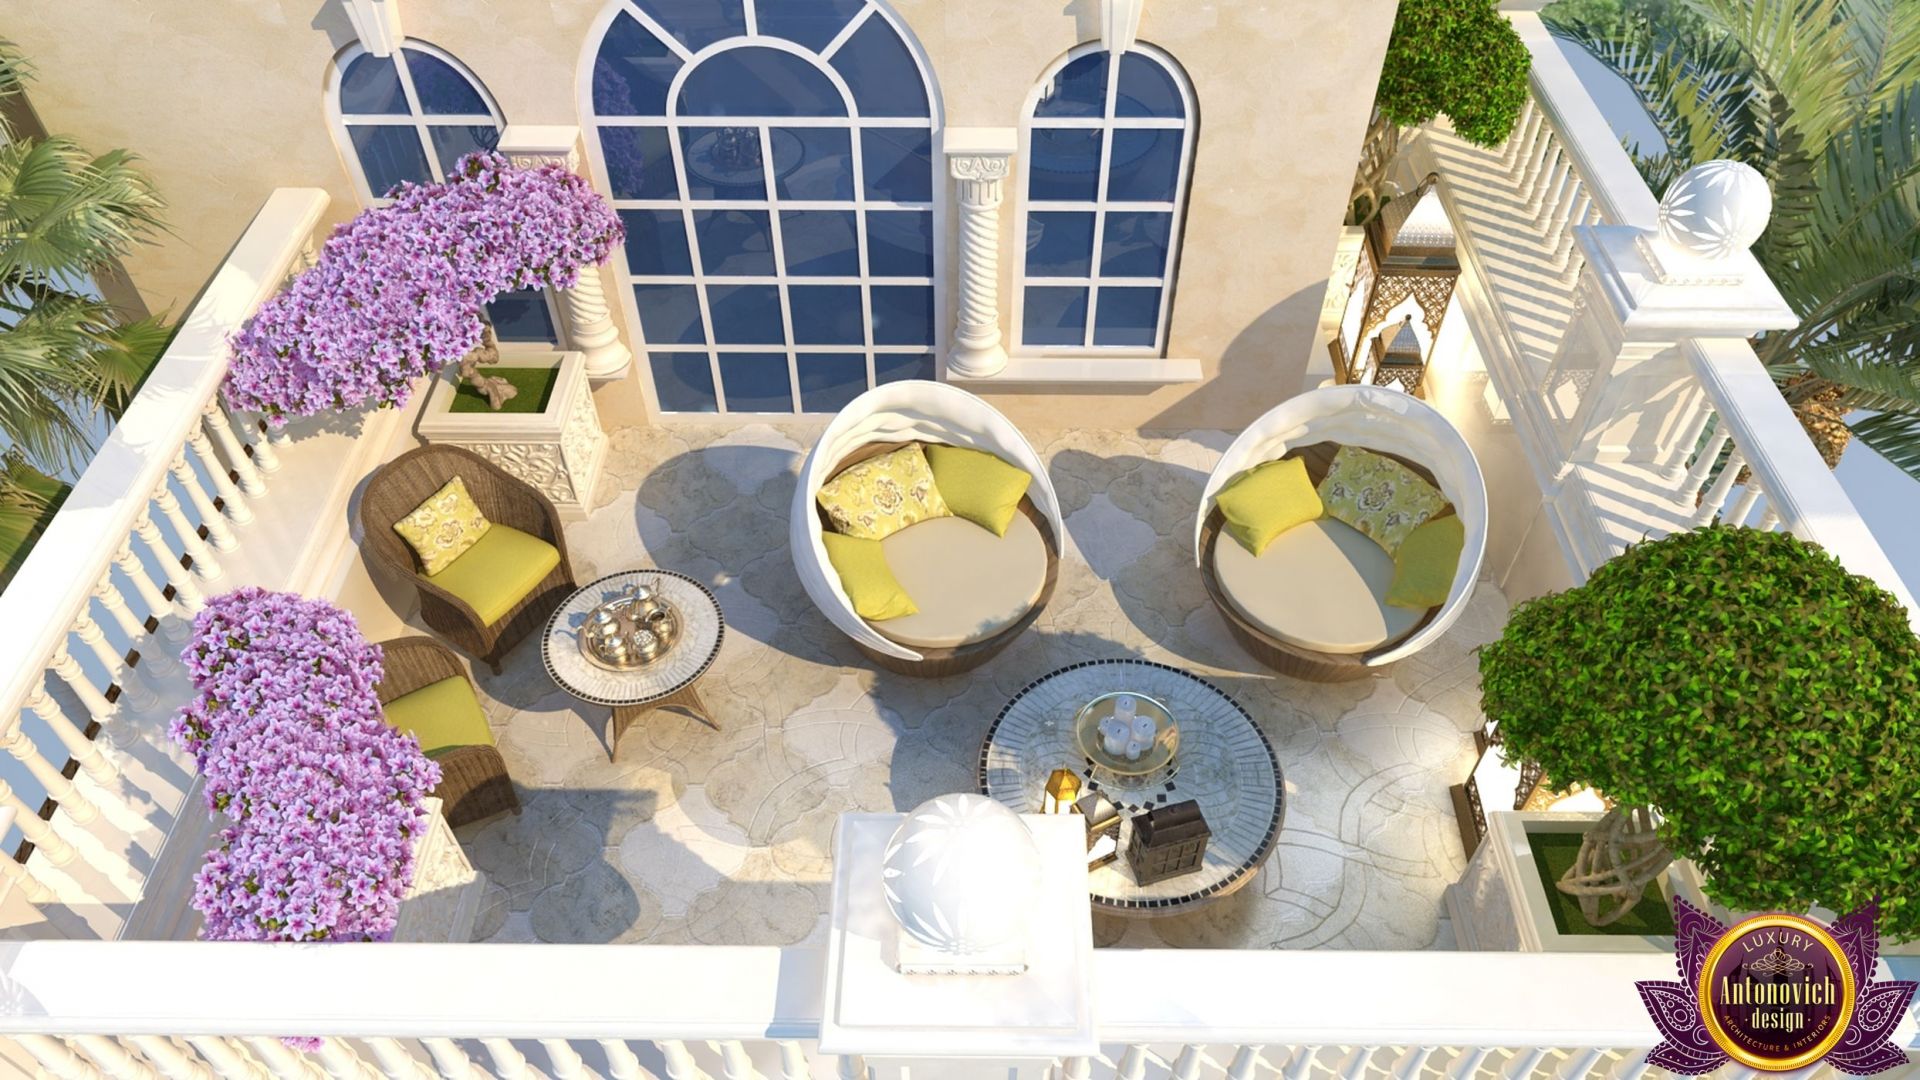 Luxurious backyard oasis by Antonovich Design